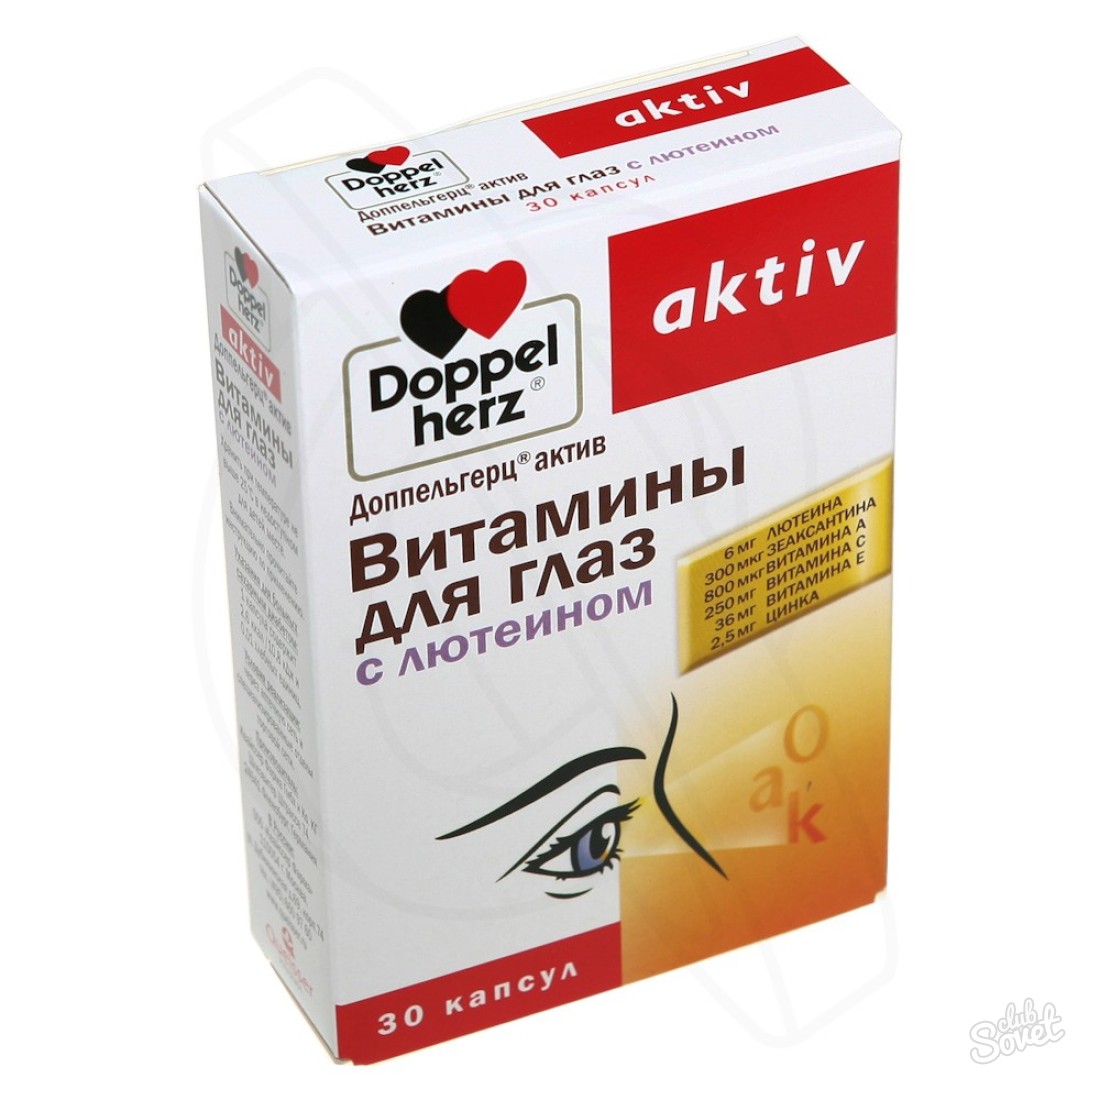 Doppeoplez Vitamin untuk Mata: Petunjuk Penggunaan